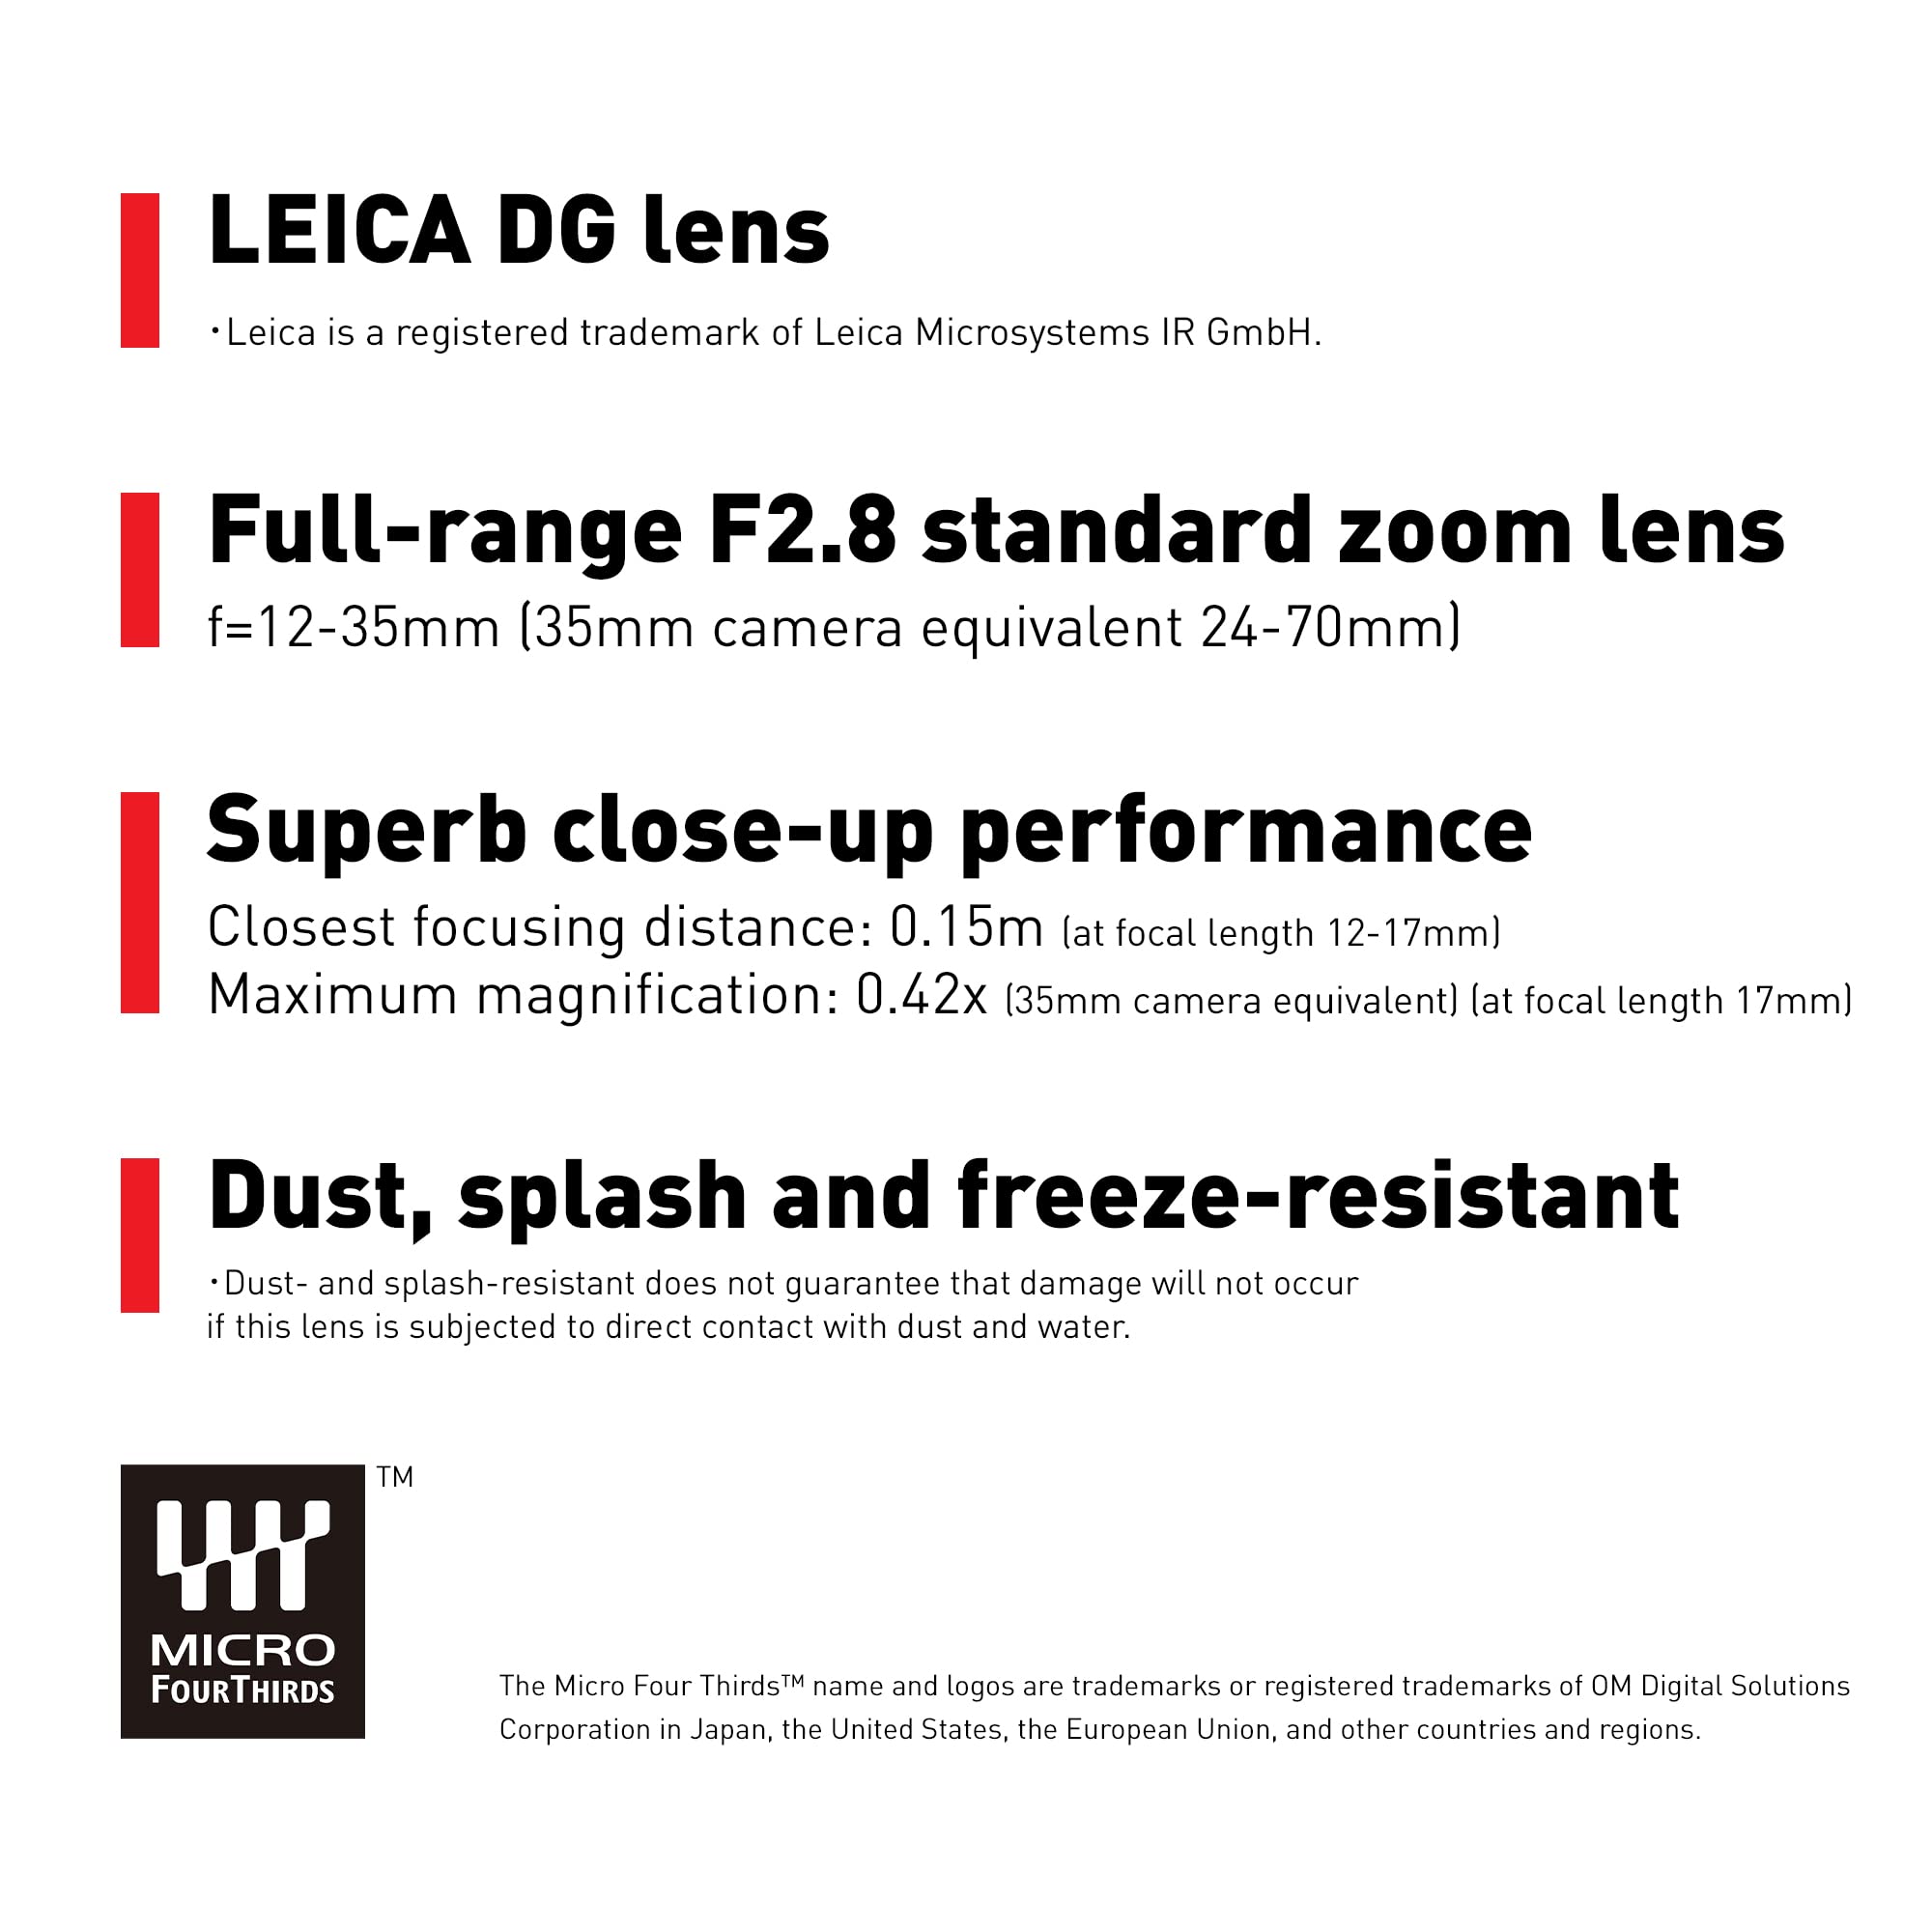 Panasonic LUMIX G Series Camera Lens, 12-35mm F2.8 Leica DG Vario-ELMARIT Interchangeable Lens for Mirrorless Micro Four Thirds Digital Cameras, Power O.I.S. - H-ES12035